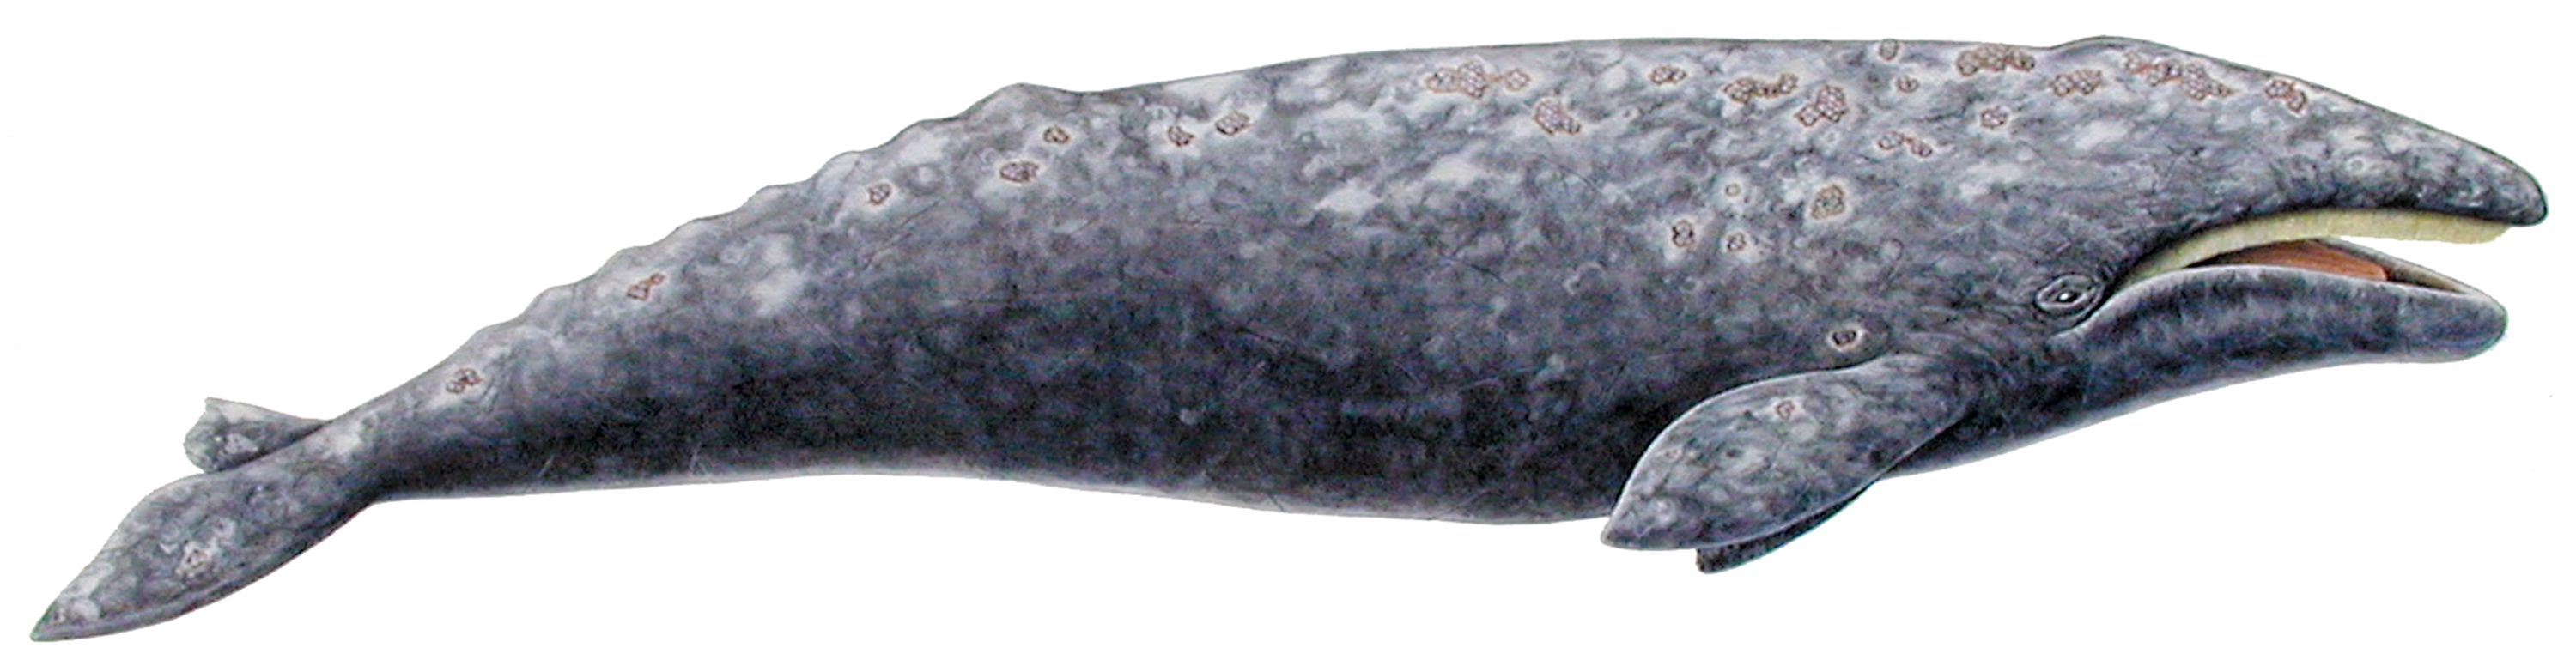 Gray-Whale-Illustration